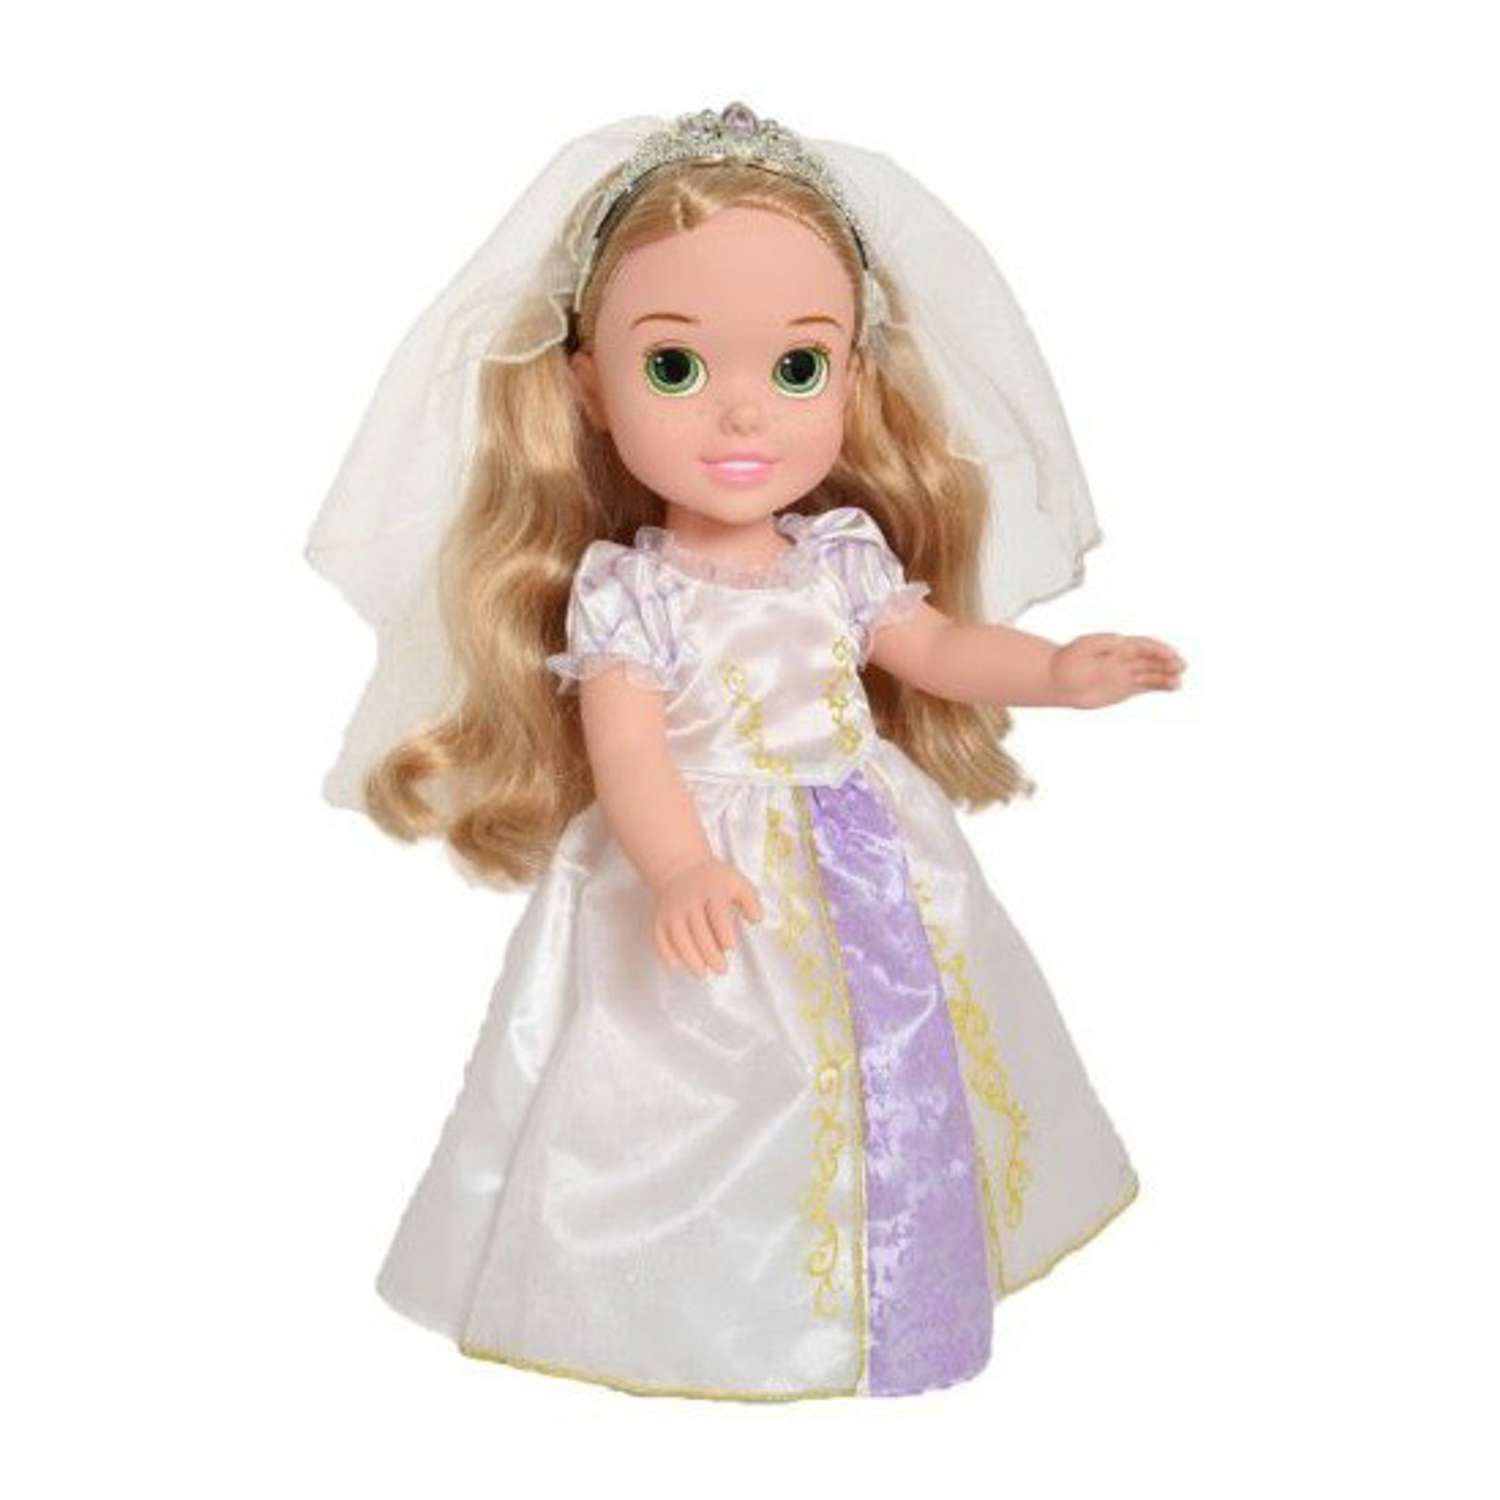 Принцесса малышка s класса. Кукла Рапунцель. Кукла Рапунцель малышка. Куклы Дисней принцессы малышки. Платье для куклы Рапунцель.